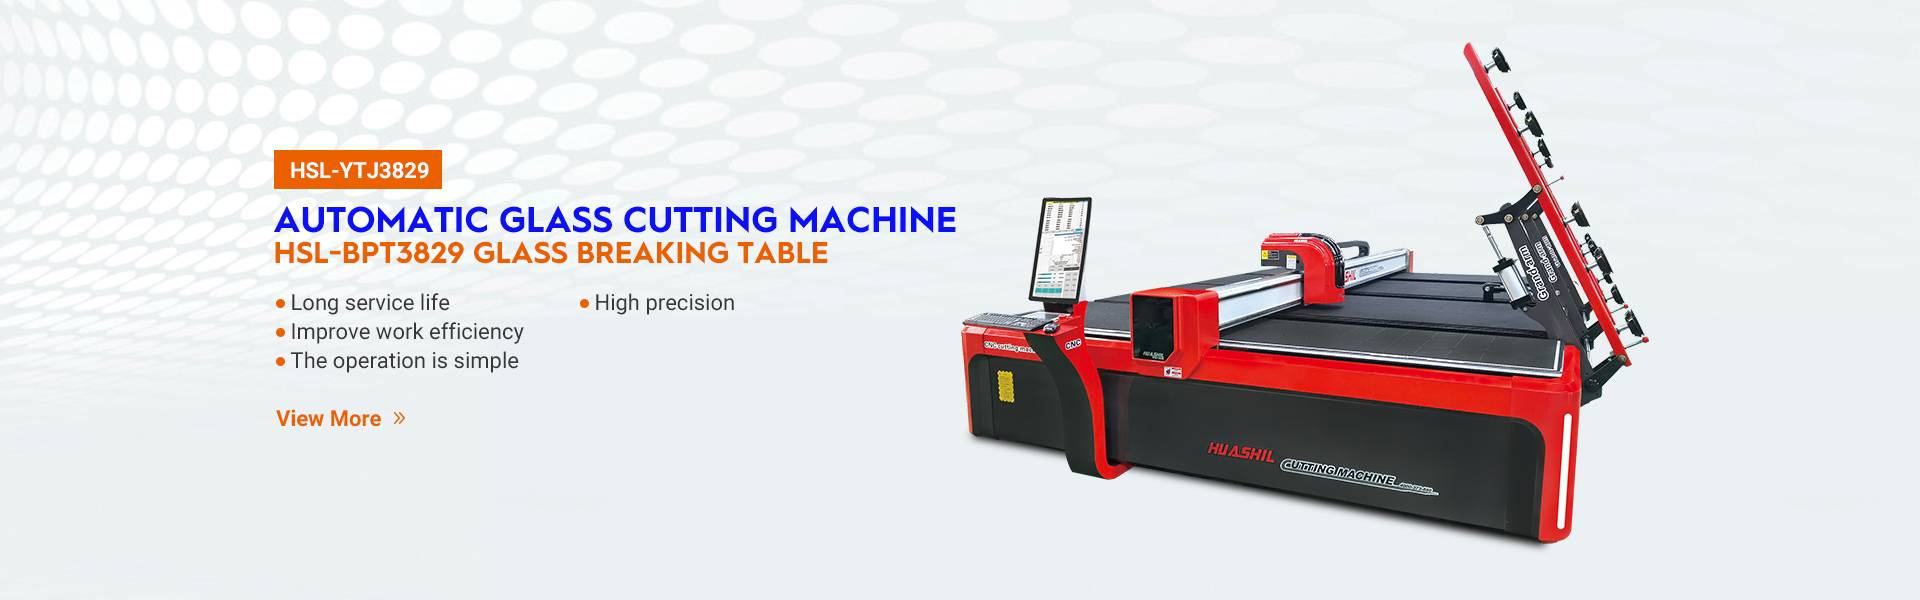 Automatic Glass Cutting Machine